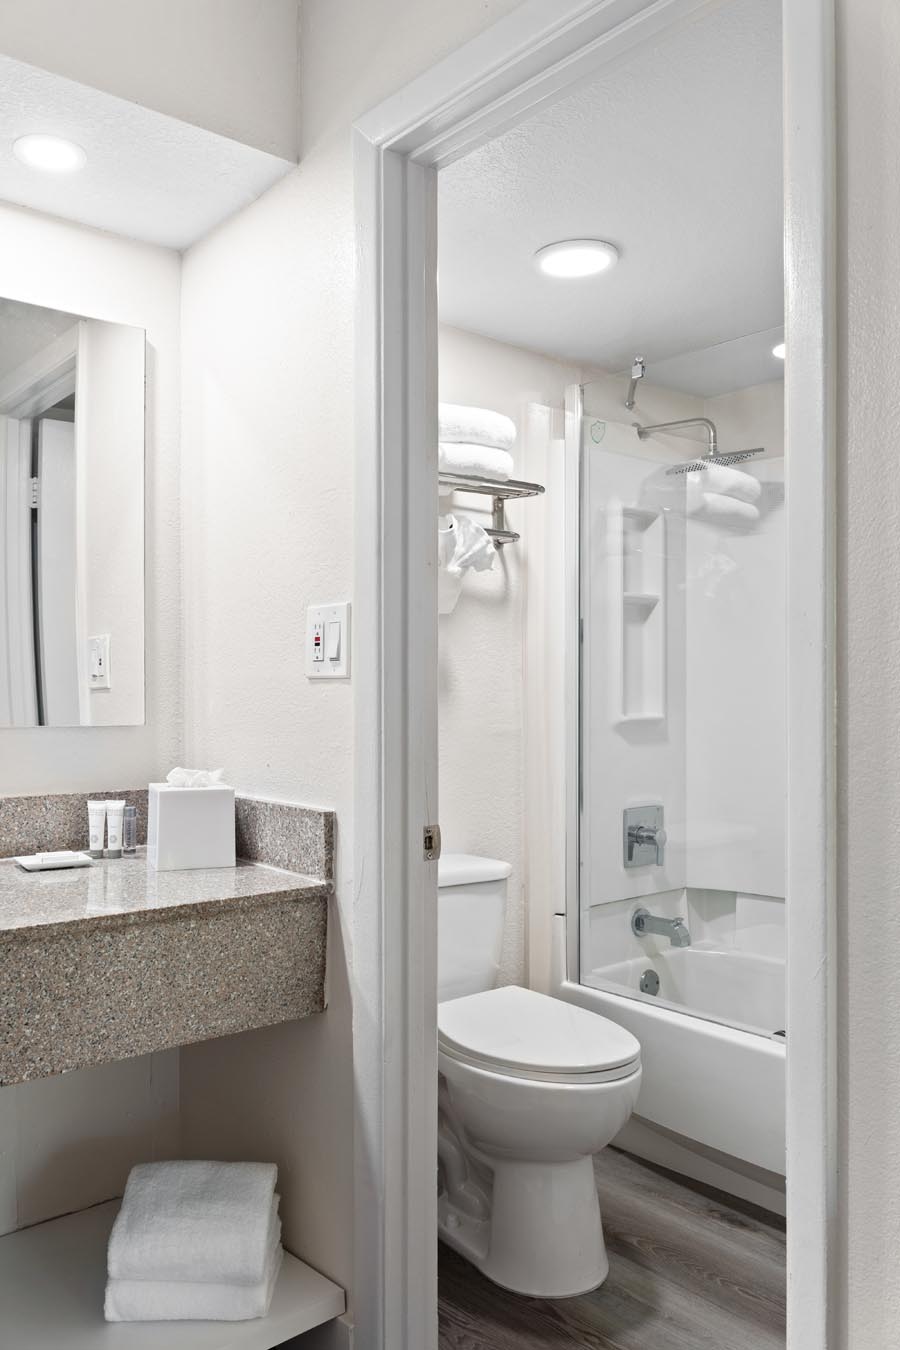 Toilet, shower, vanity and mirror